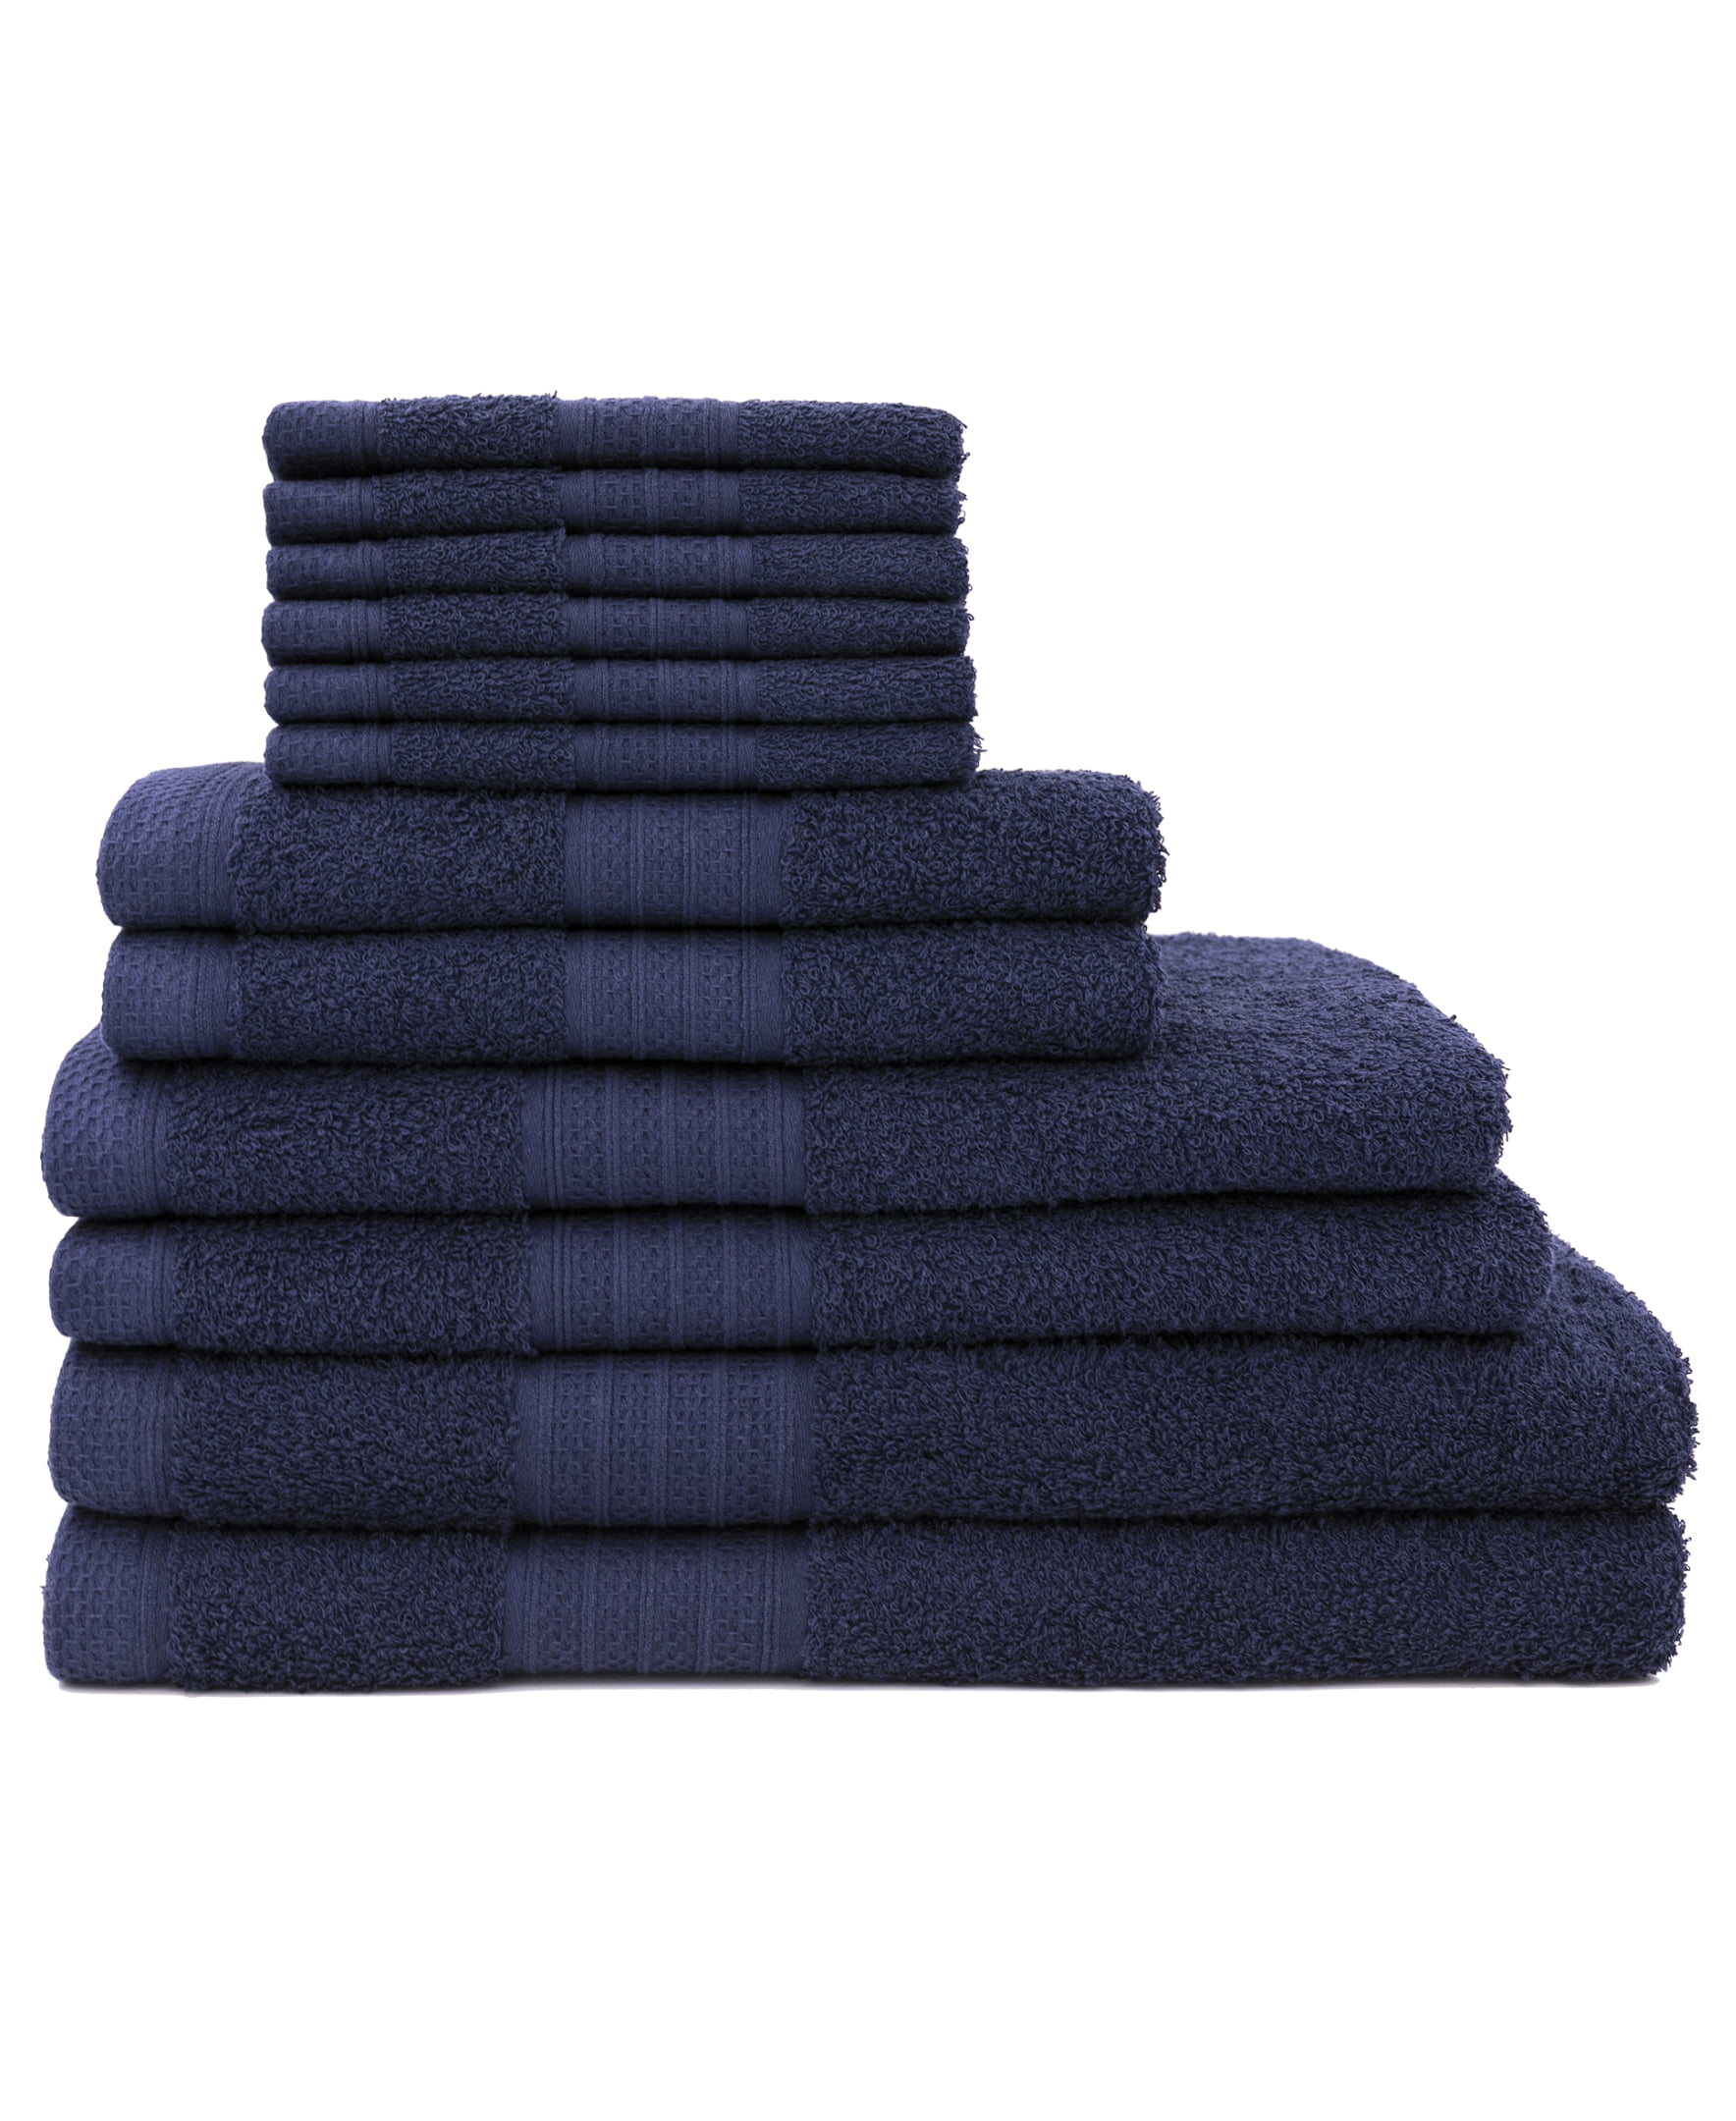 100-Percent Cotton Luxury 12-Piece Towel Set - image 1 of 3